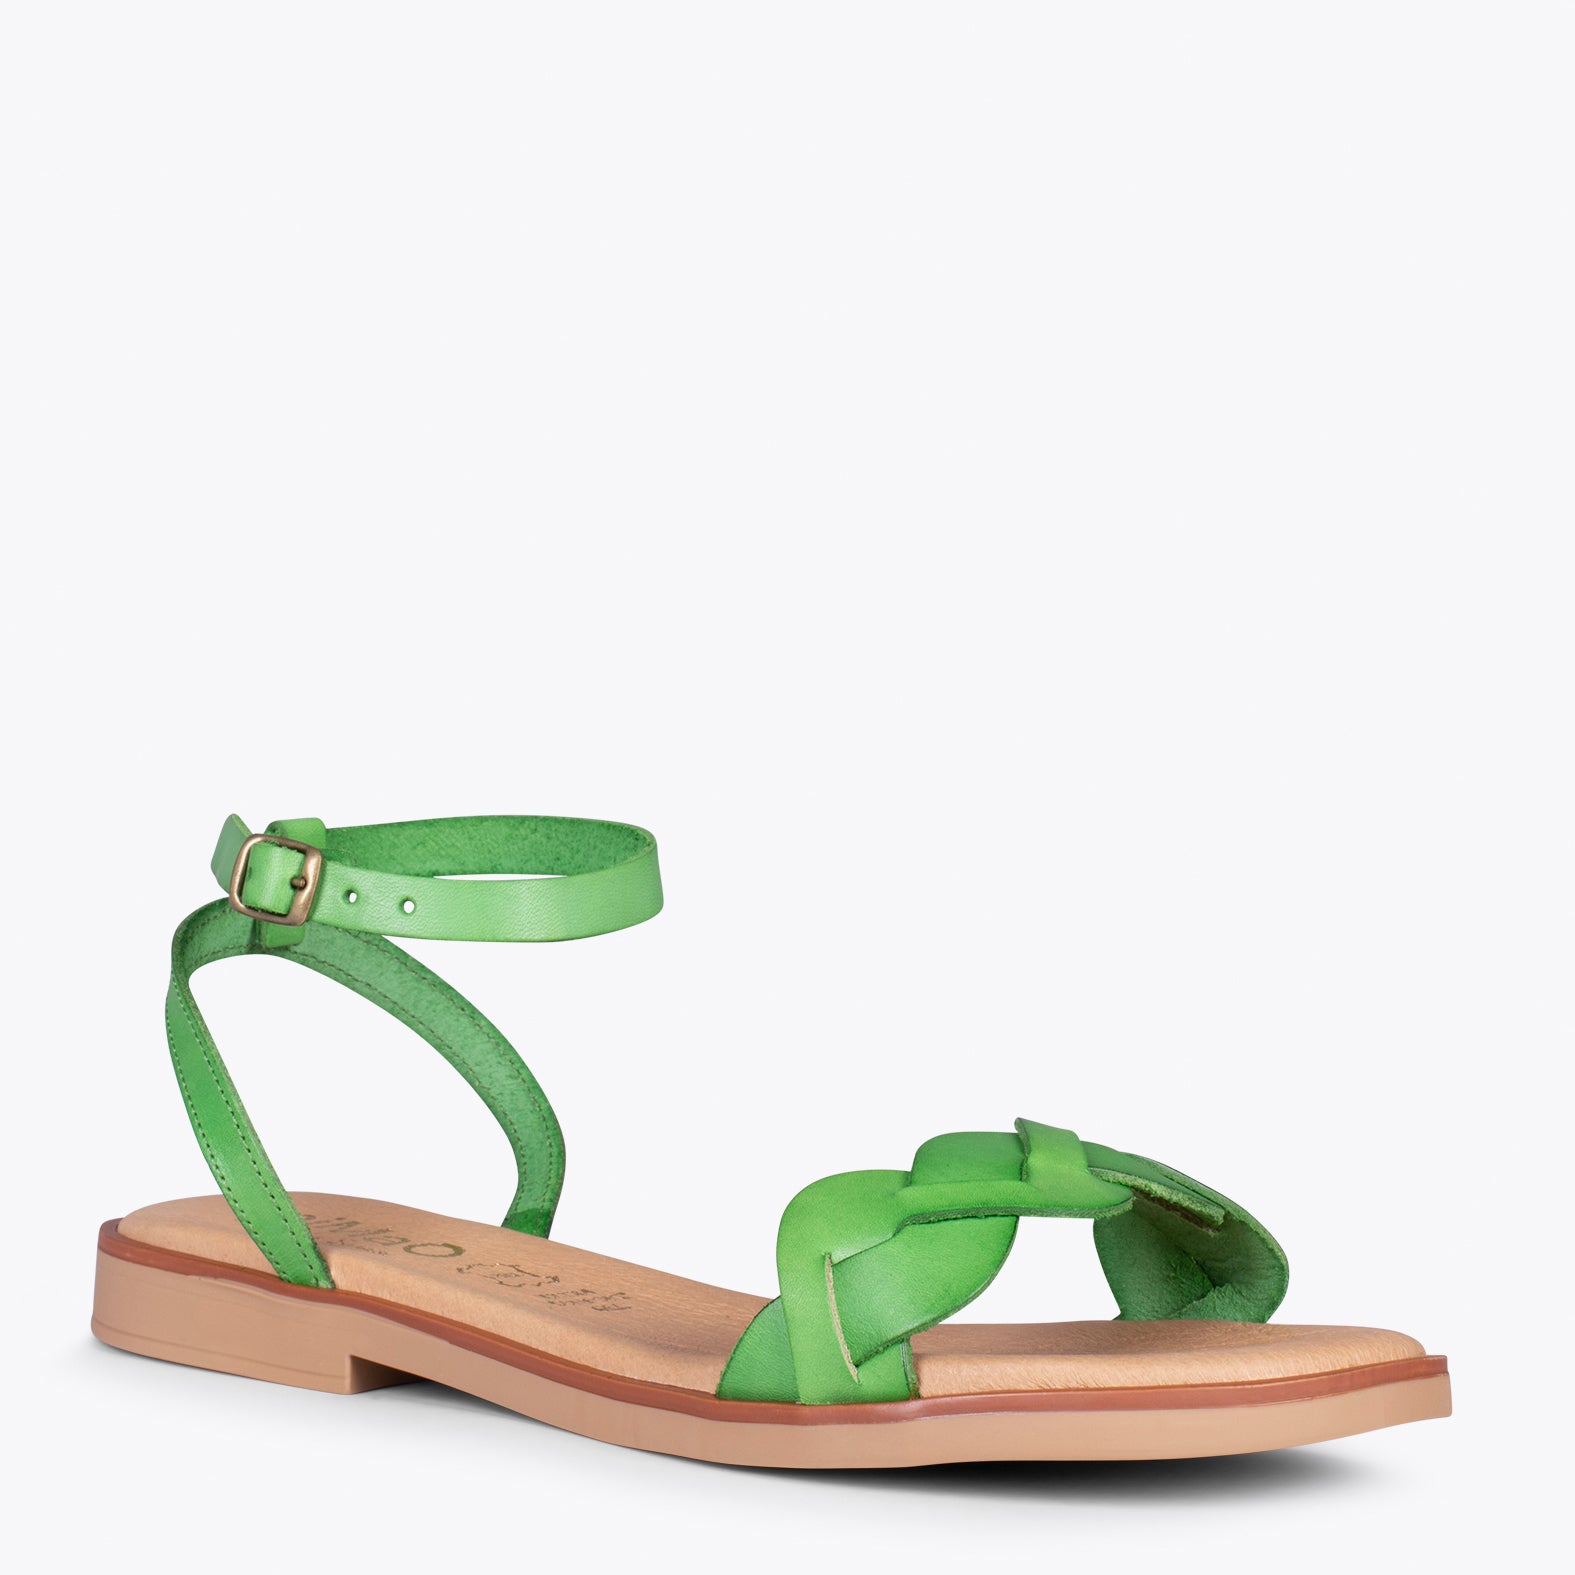 ARECA – GREEN flat sandal with braided upper